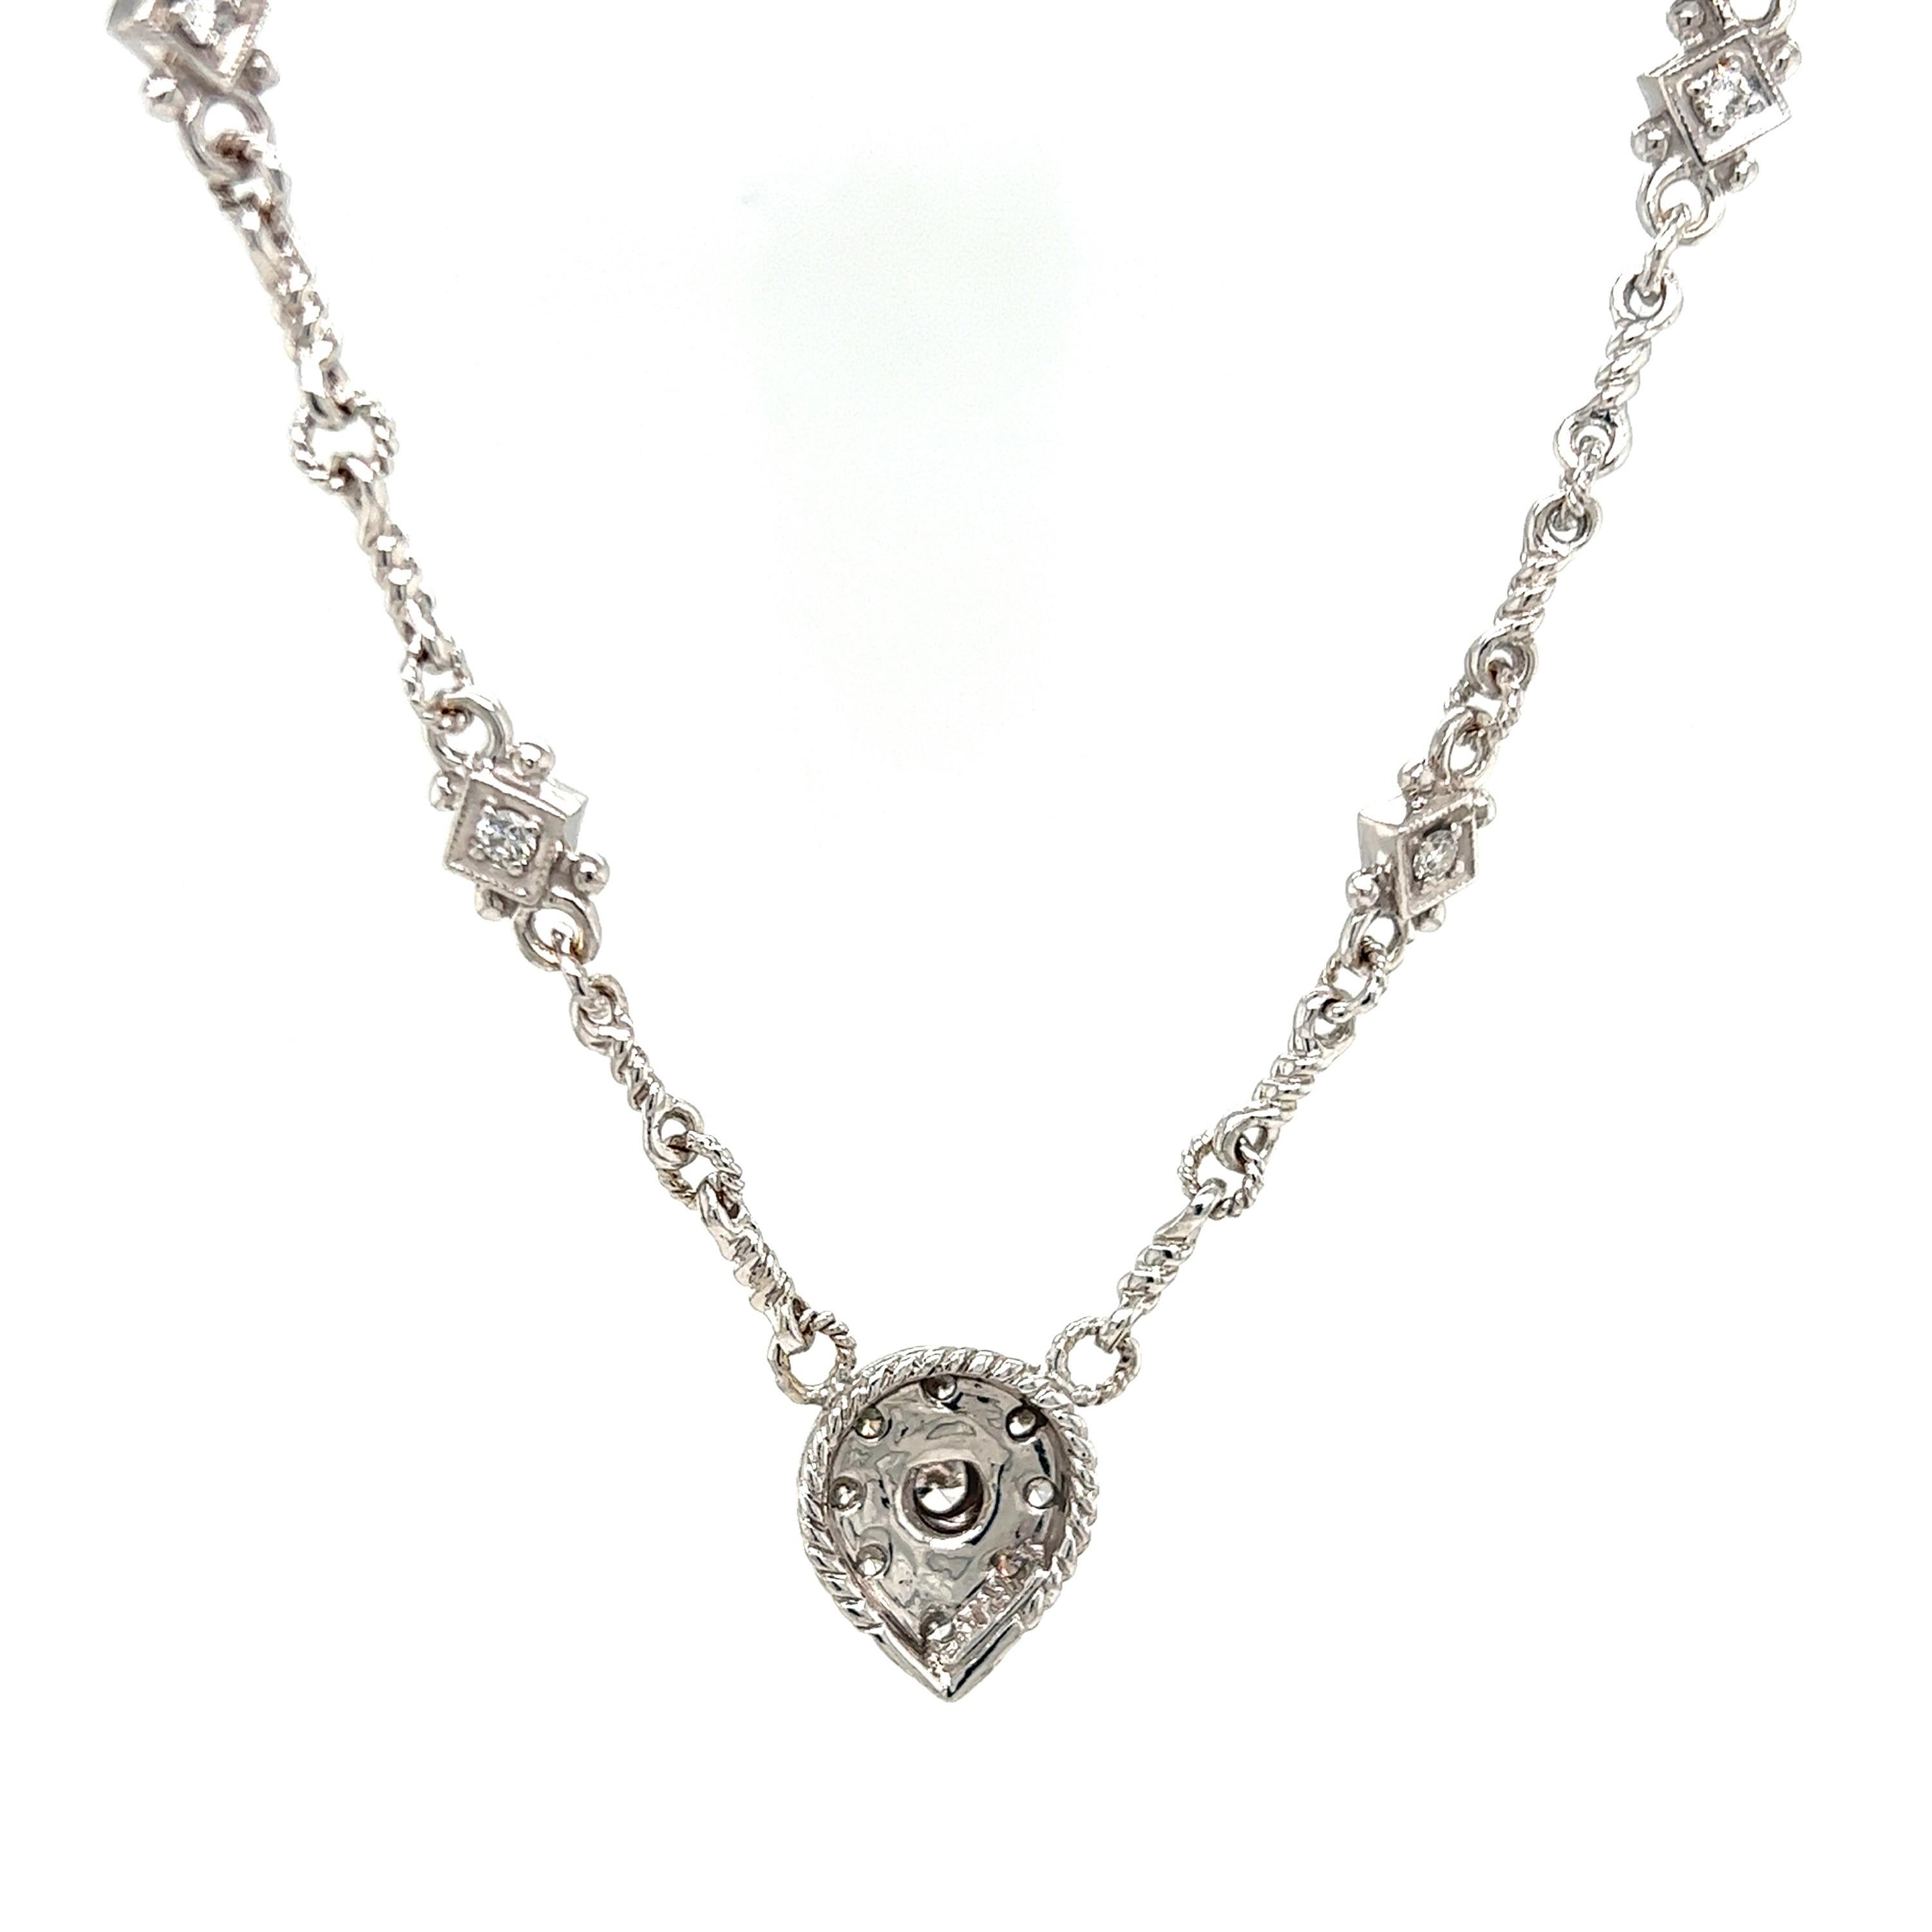 Round Cut Judith Ripka 18K White Gold and Diamond Handmade Chain Pendant Necklace